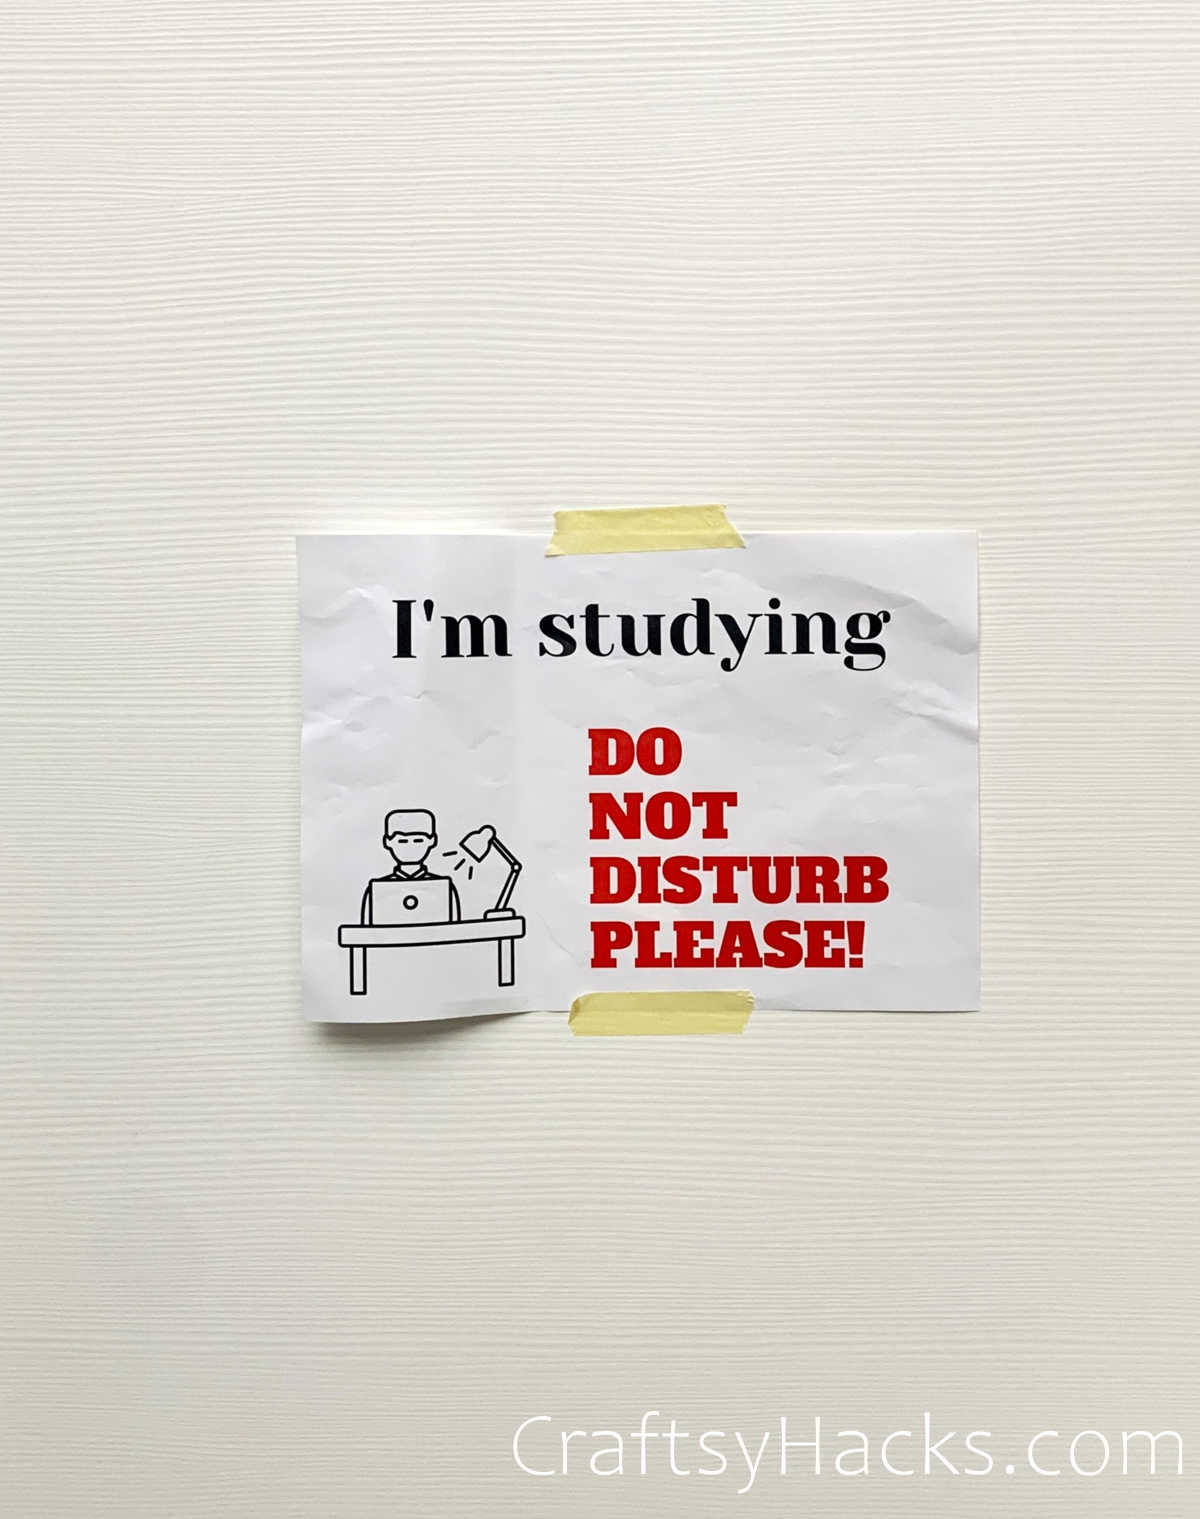 "no disturb" sign